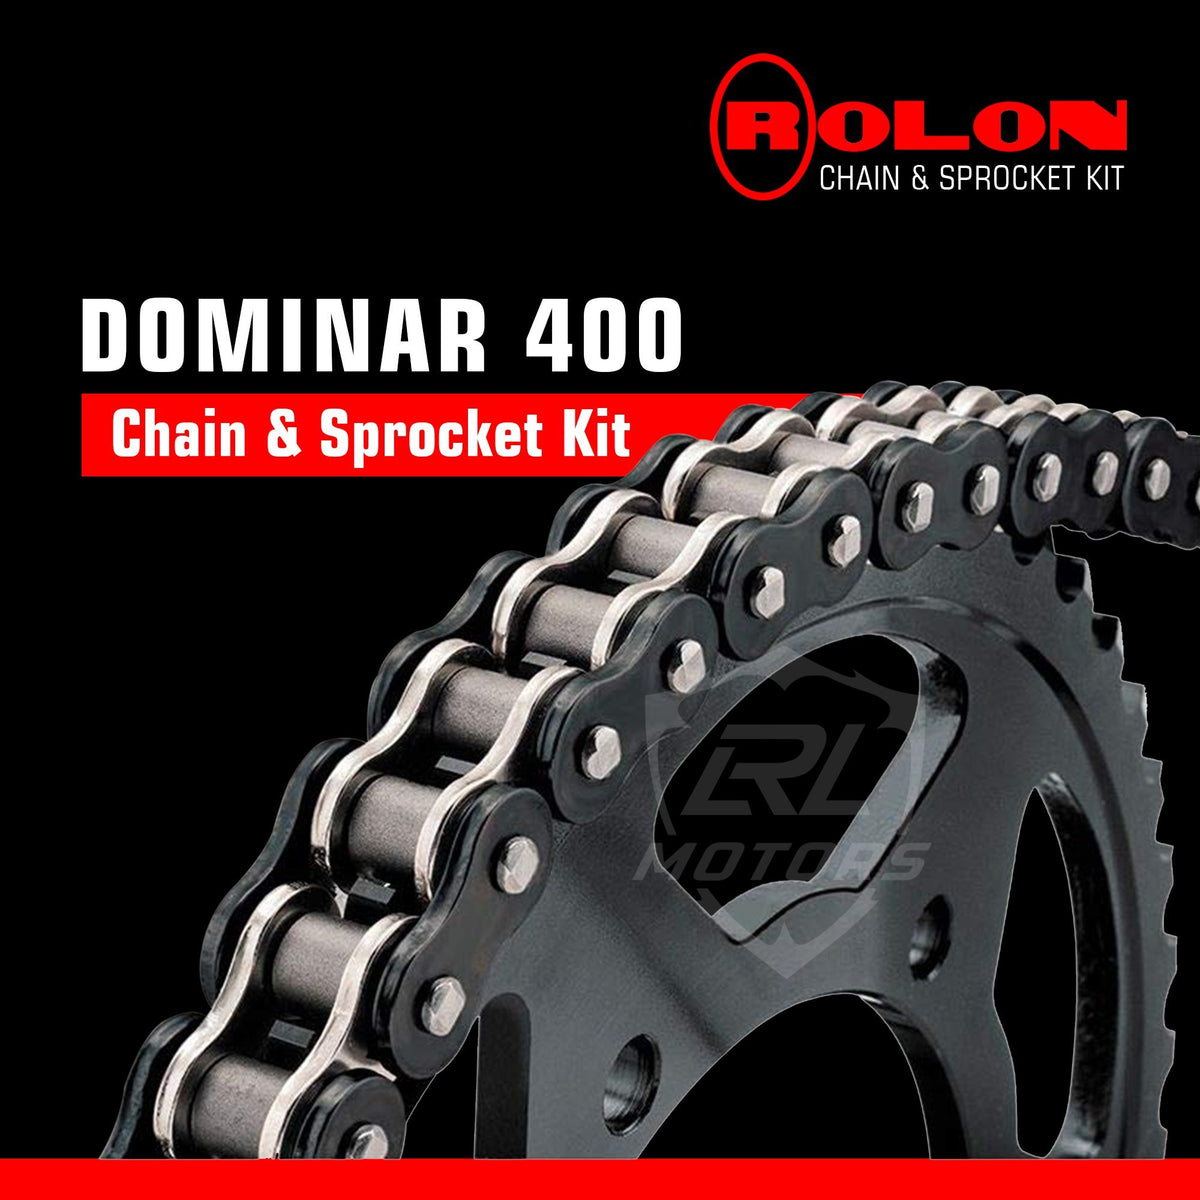 Bajaj Dominar 400 Rolon Chain & Sprocket Kit - LRL Motors